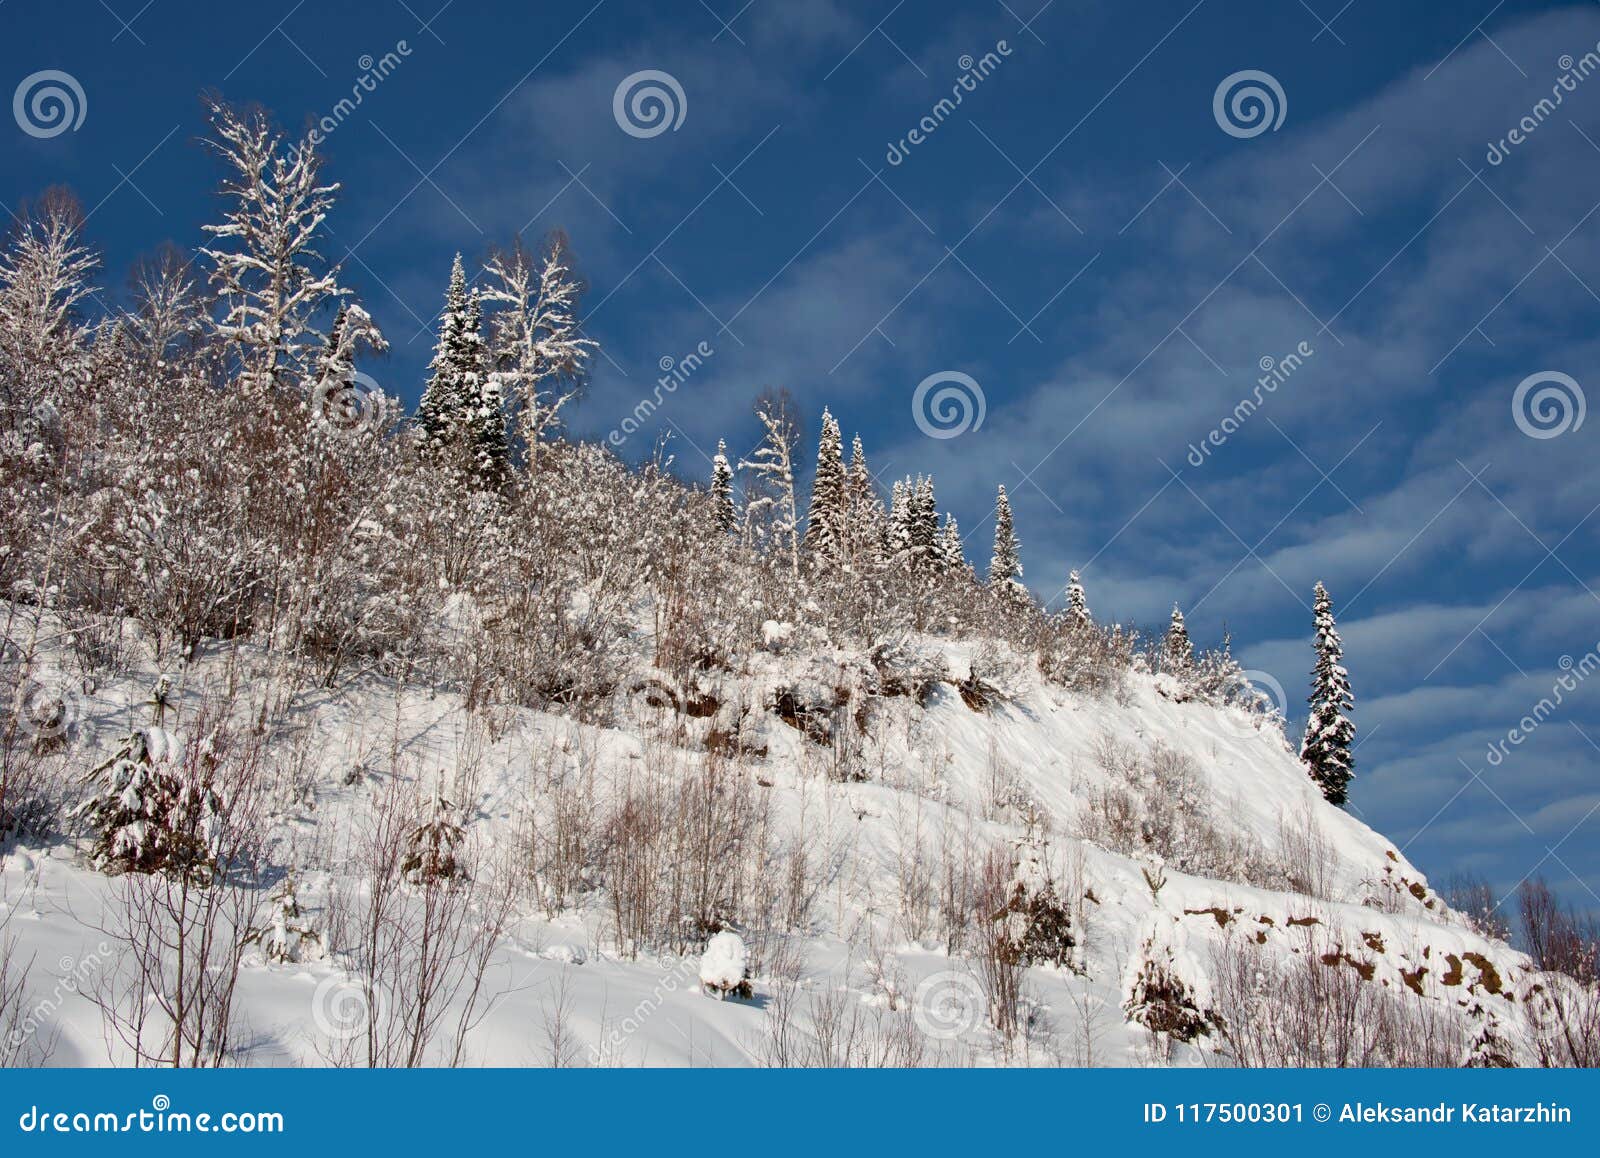 Impassable Snow Covered Siberian Taiga Stock Image Image Of Birch